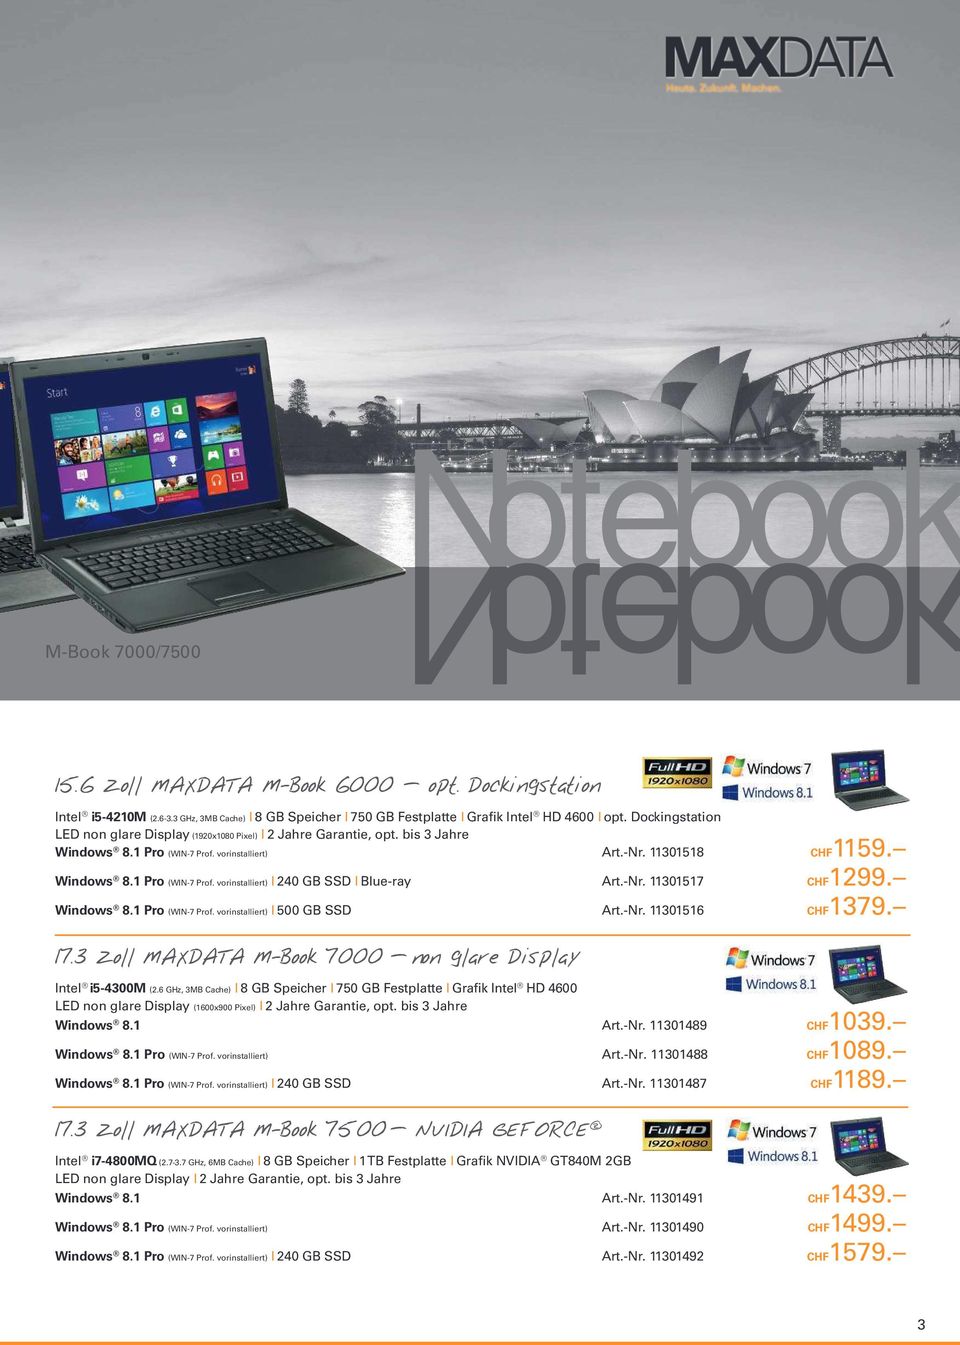 -Nr. 11301517 CHF1299. Windows 8.1 Pro (WIN-7 Prof. vorinstalliert) l 500 GB SSD Art.-Nr. 11301516 CHF1379. 17.3 Zoll MAXDATA M-Book 7000 non glare Display Intel i5-4300m (2.